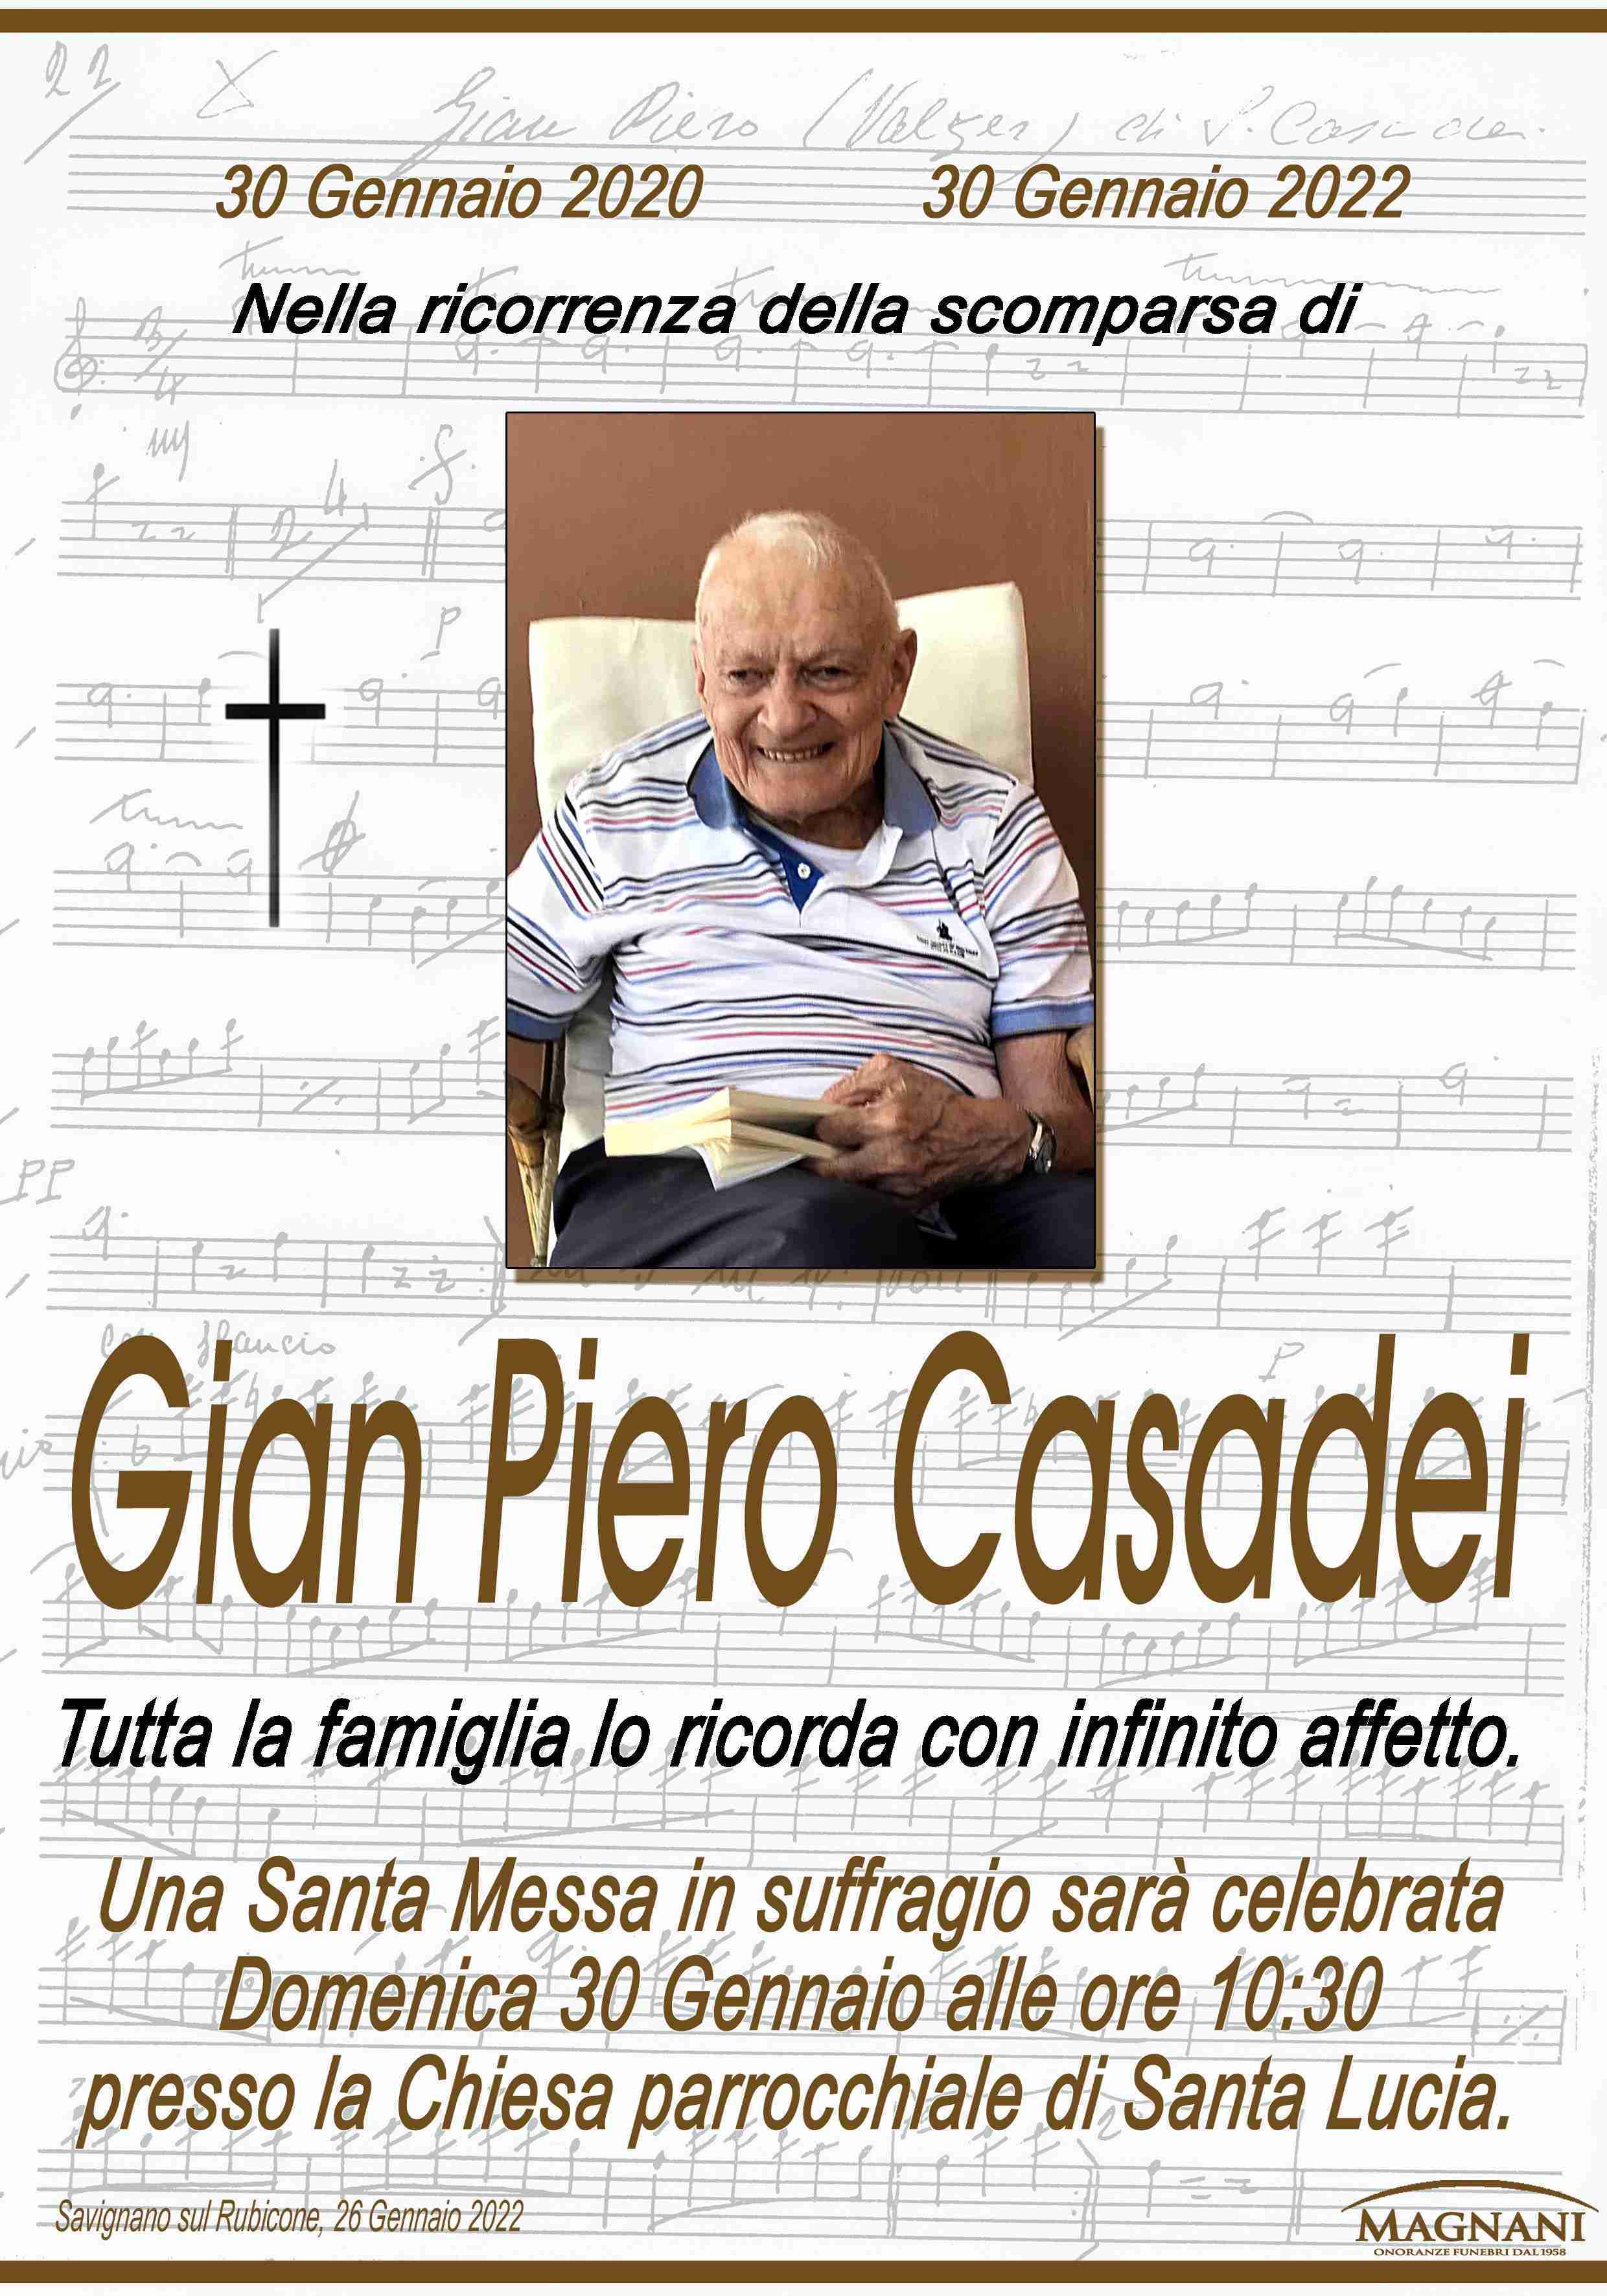 Gian Piero Casadei